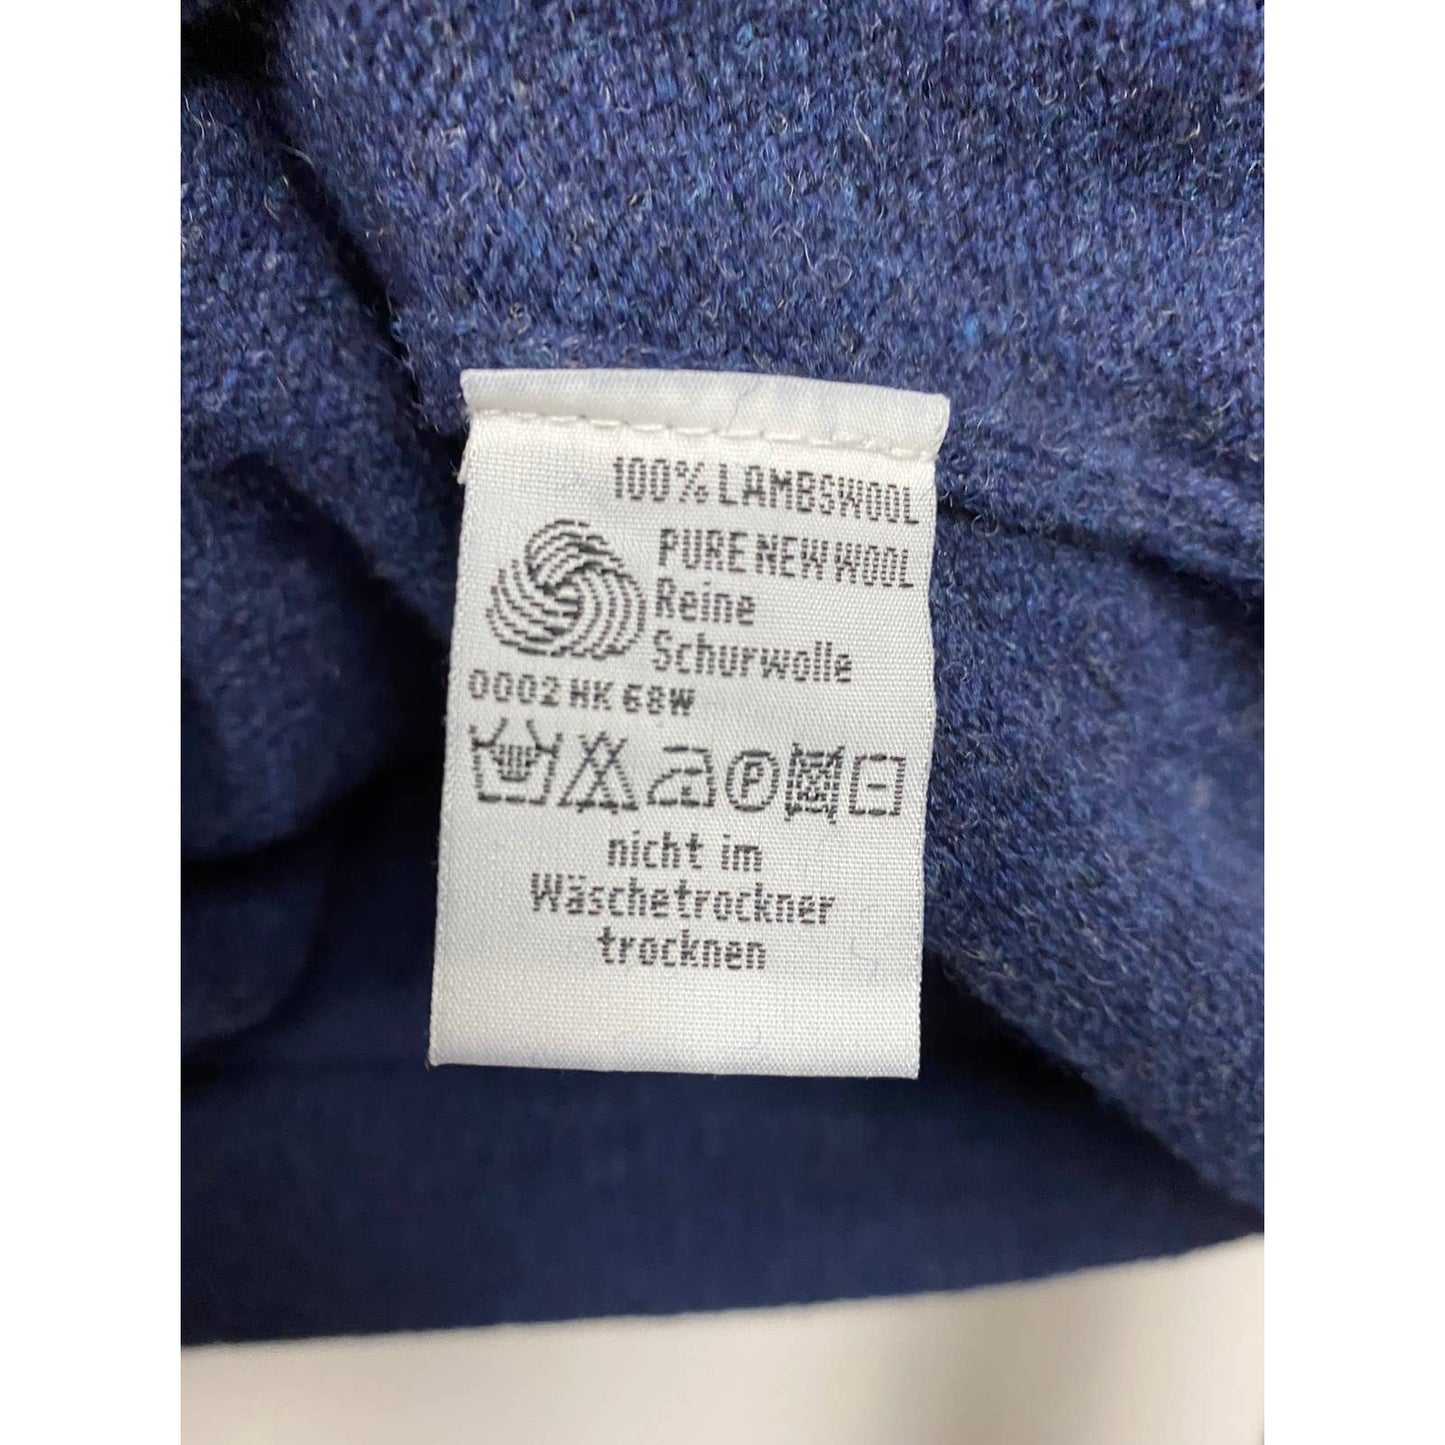 Yves Saint Laurent vintage sweater YSL knitwear navy jumper